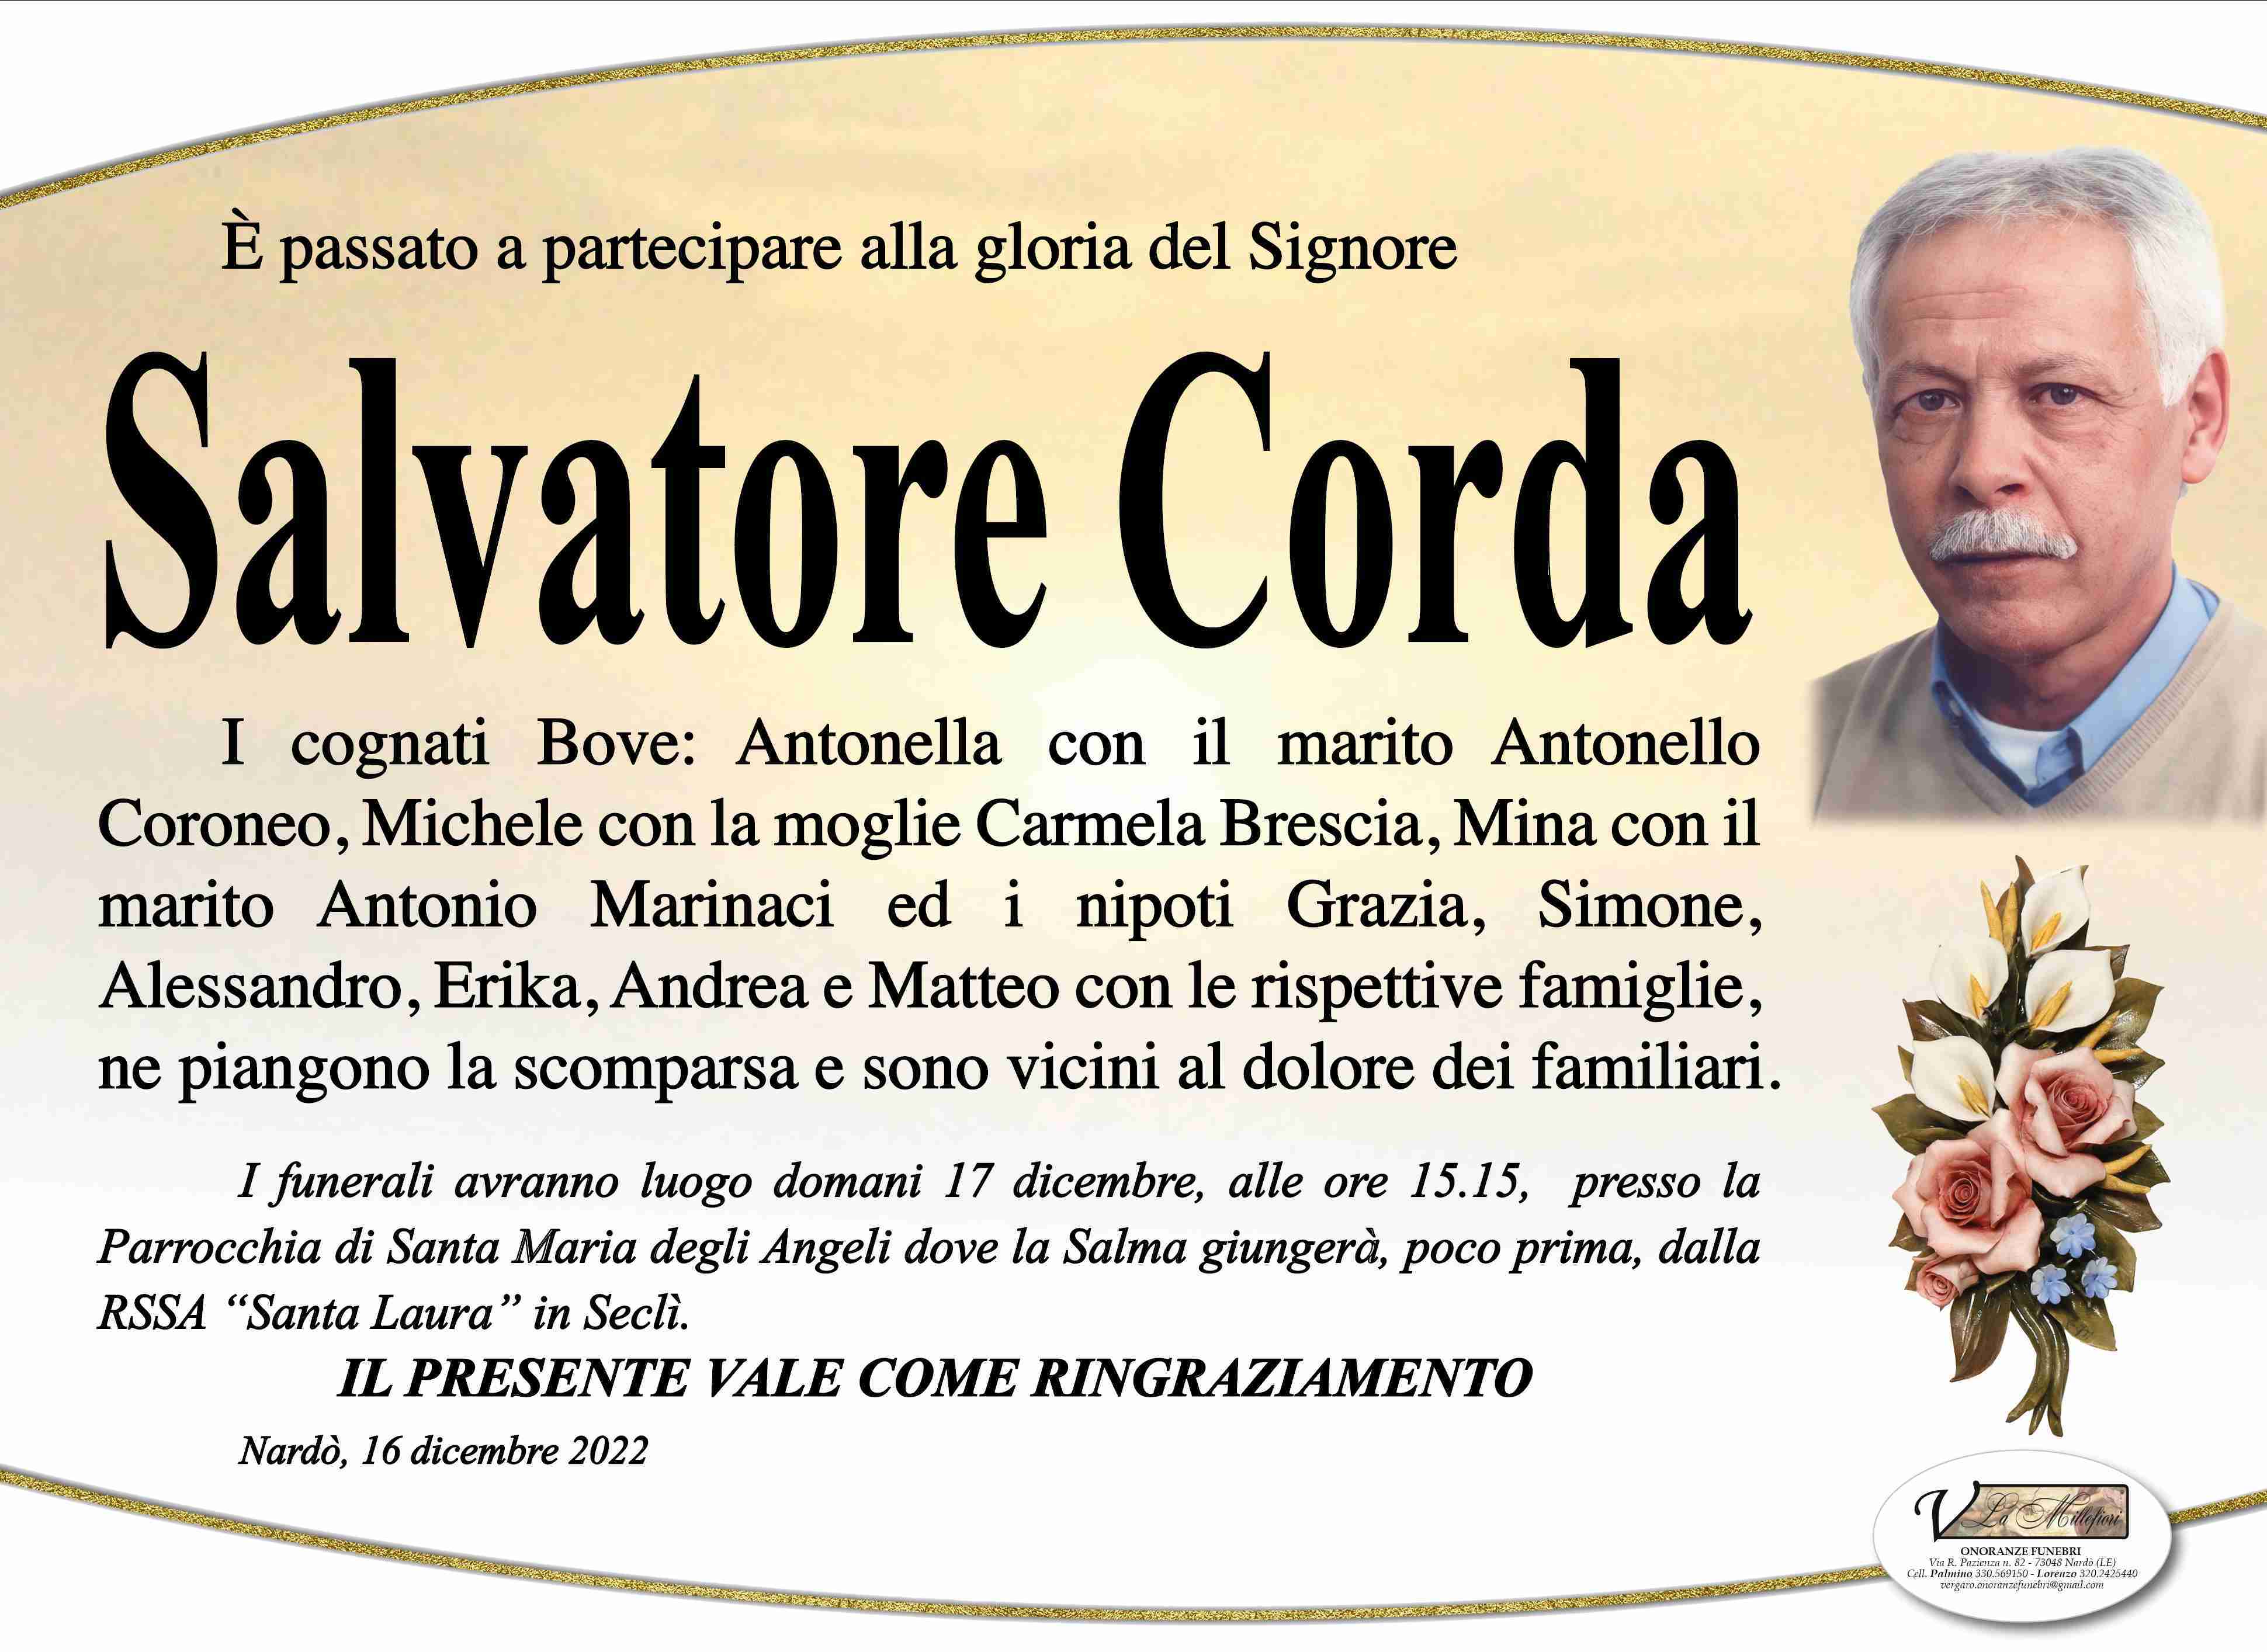 Salvatore Corda